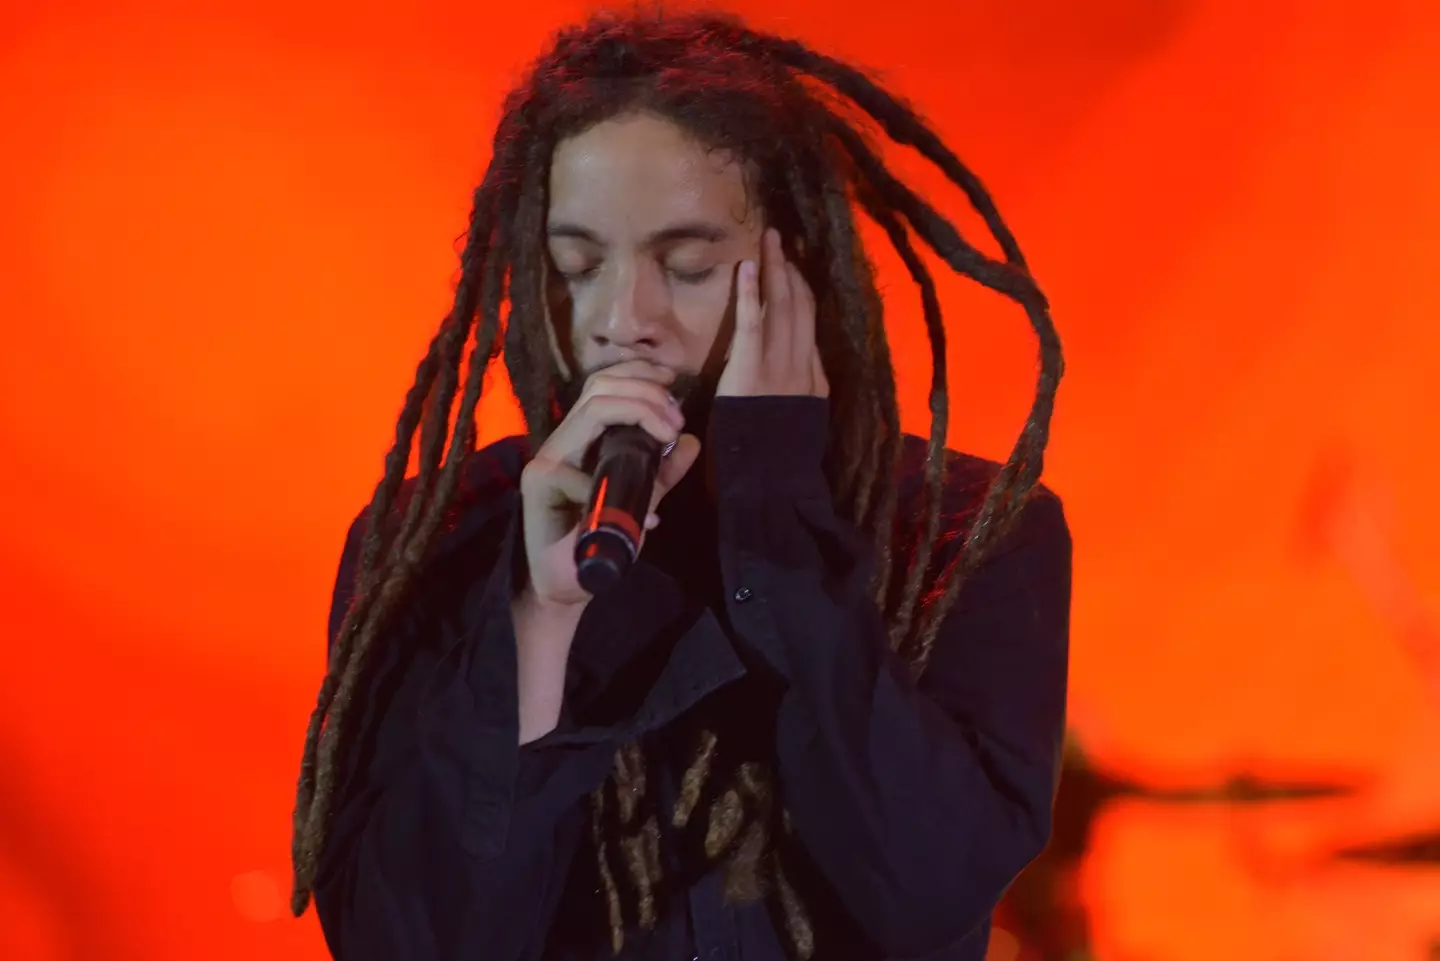 Joseph 'Jo Mersa' Marley performing in 2017.